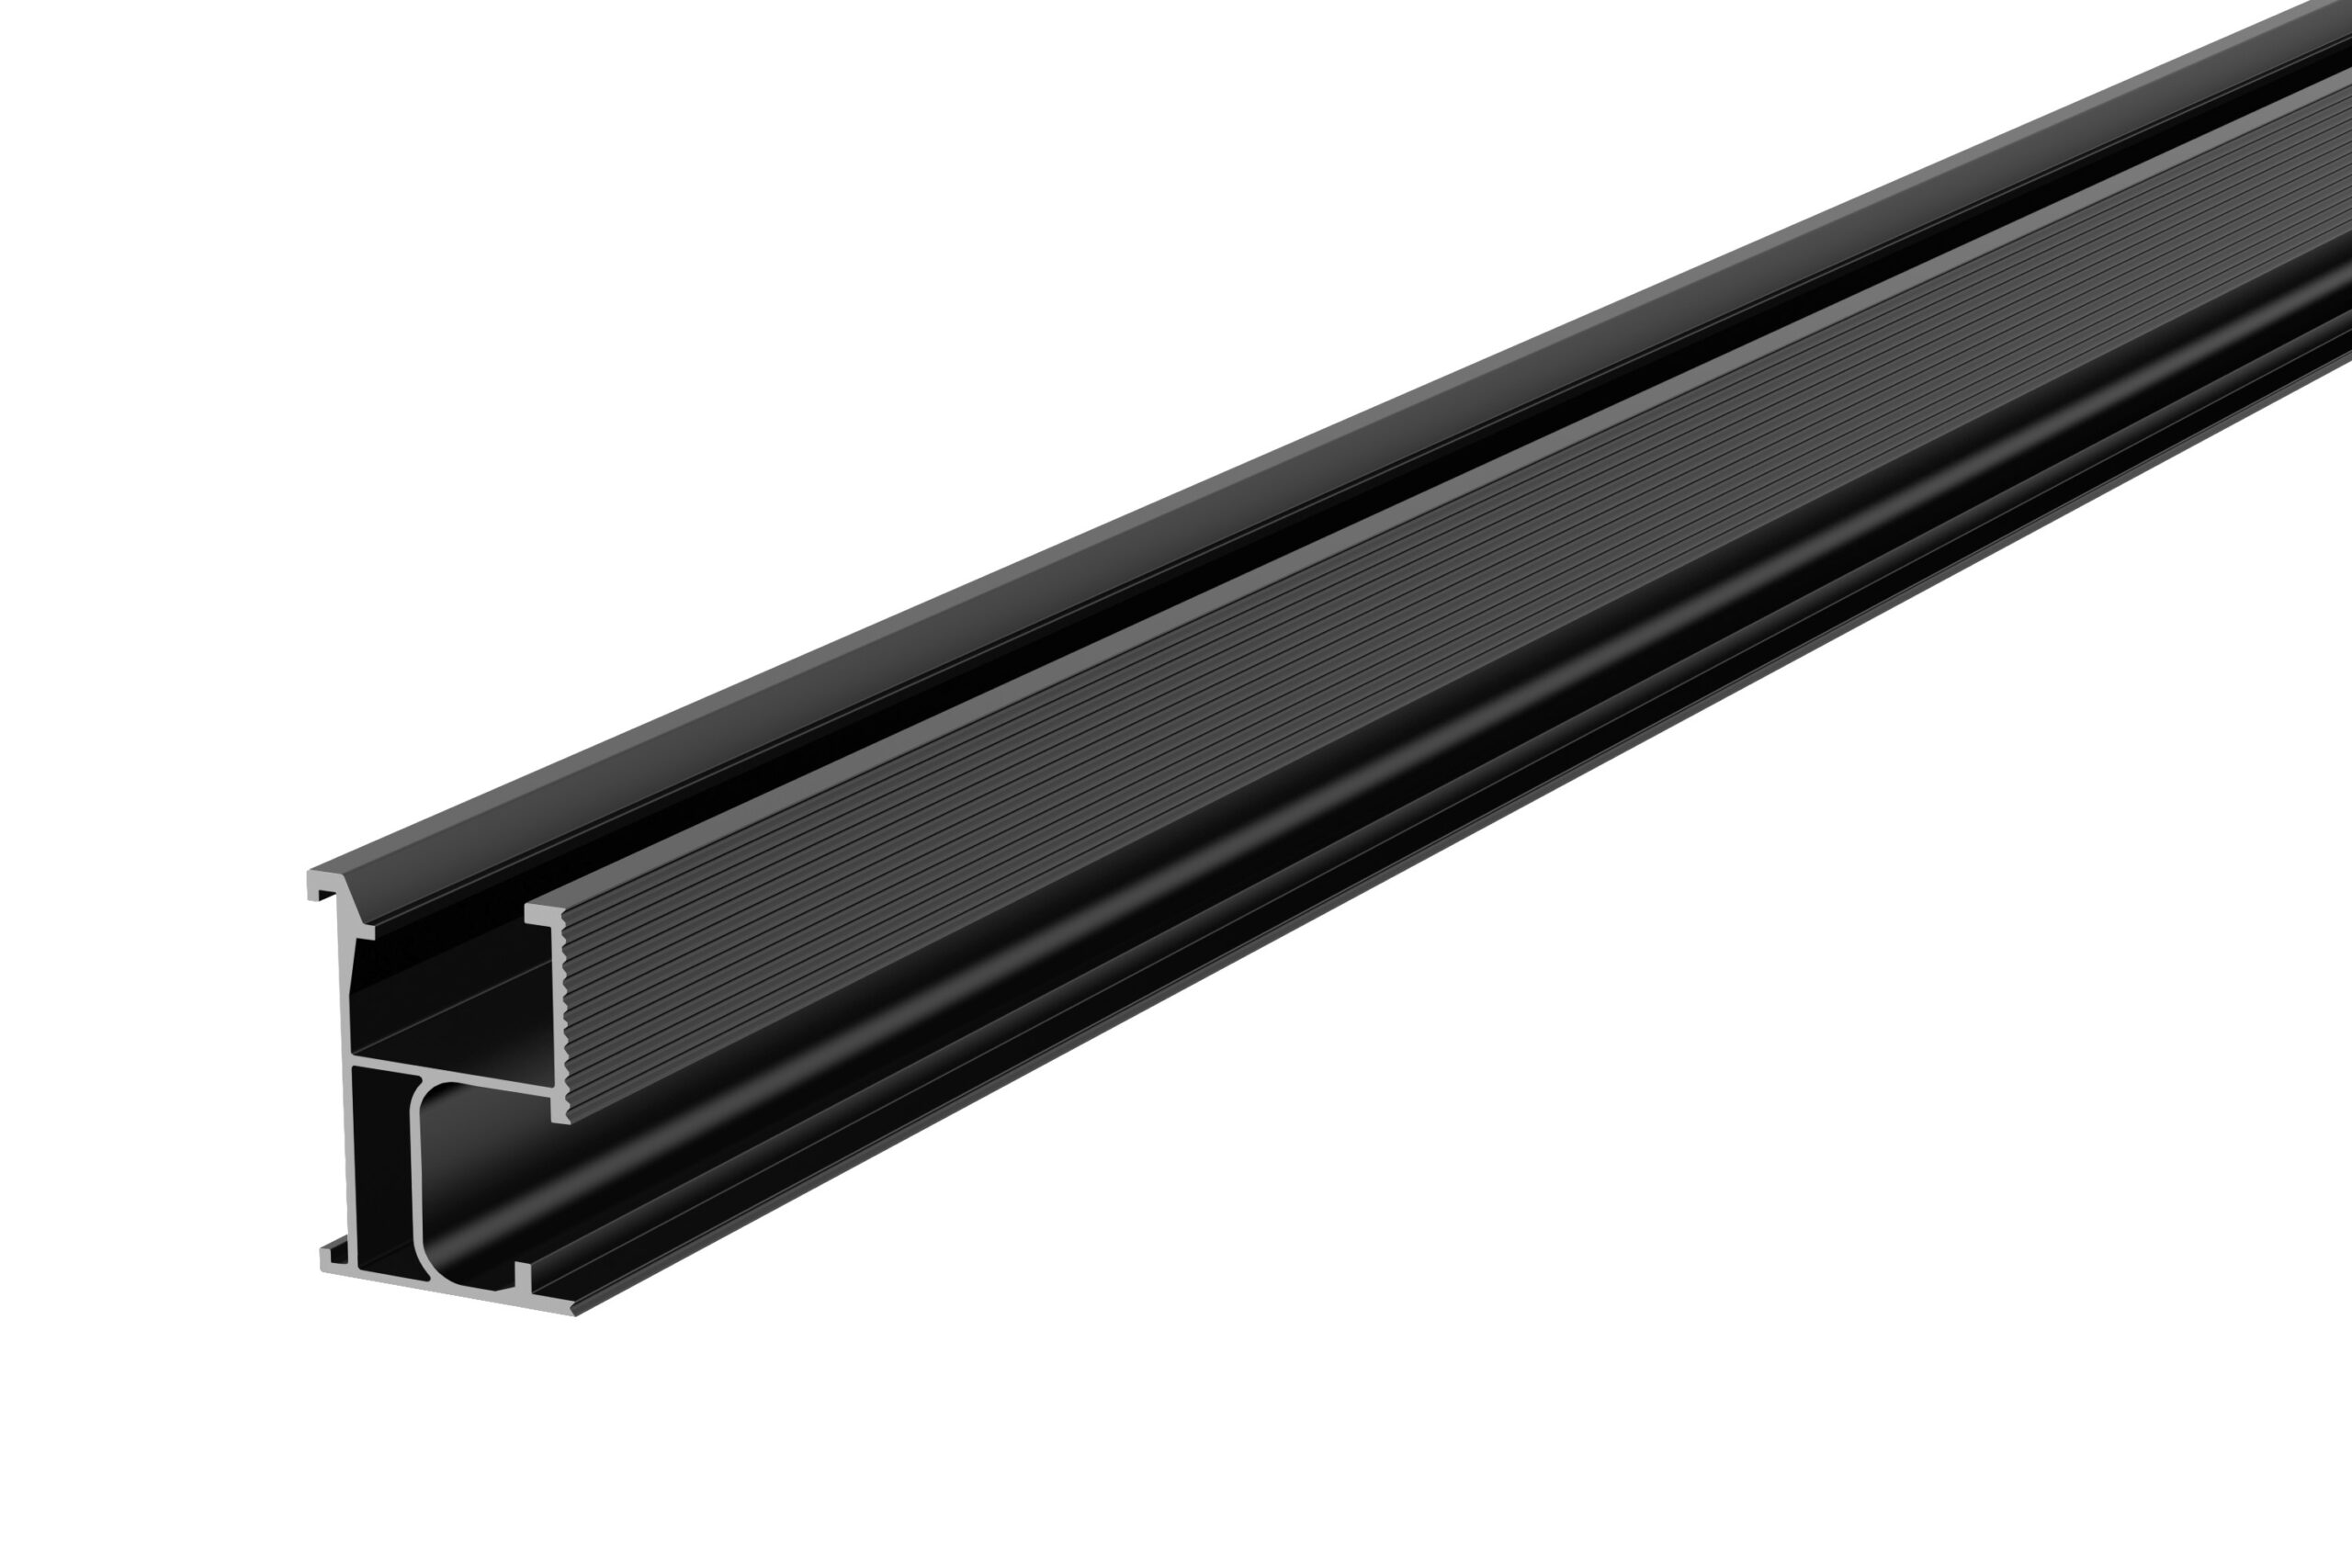 Clenergy Elite Rail, 4600mm Black Anodized – NEW!